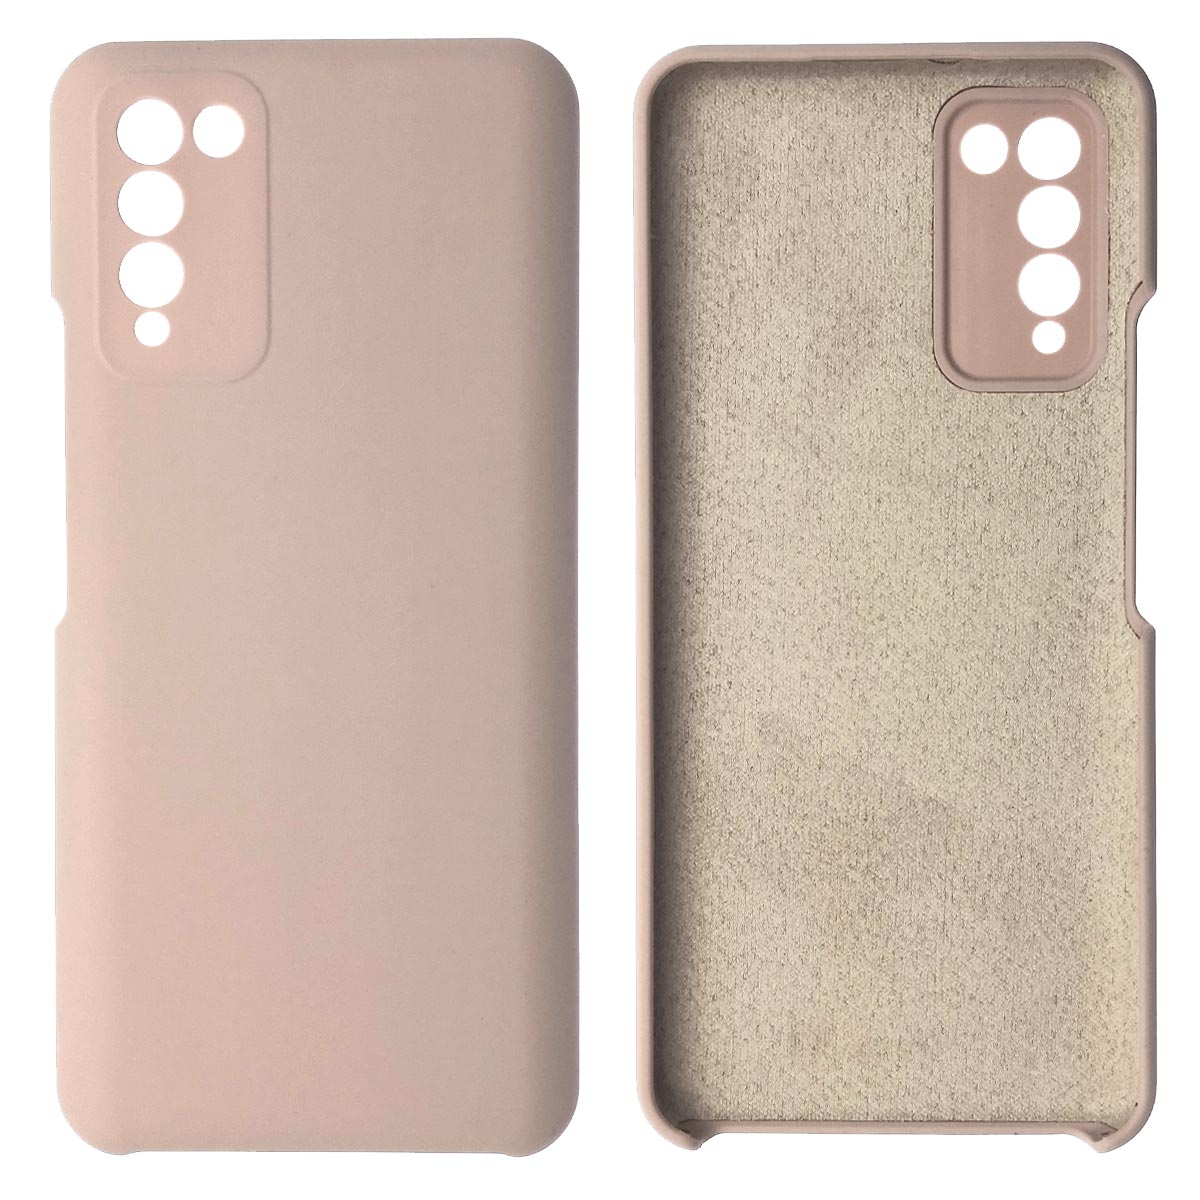 Чехол накладка Silicon Cover для HUAWEI Honor 10X Lite, силикон, бархат, цвет розовый песок